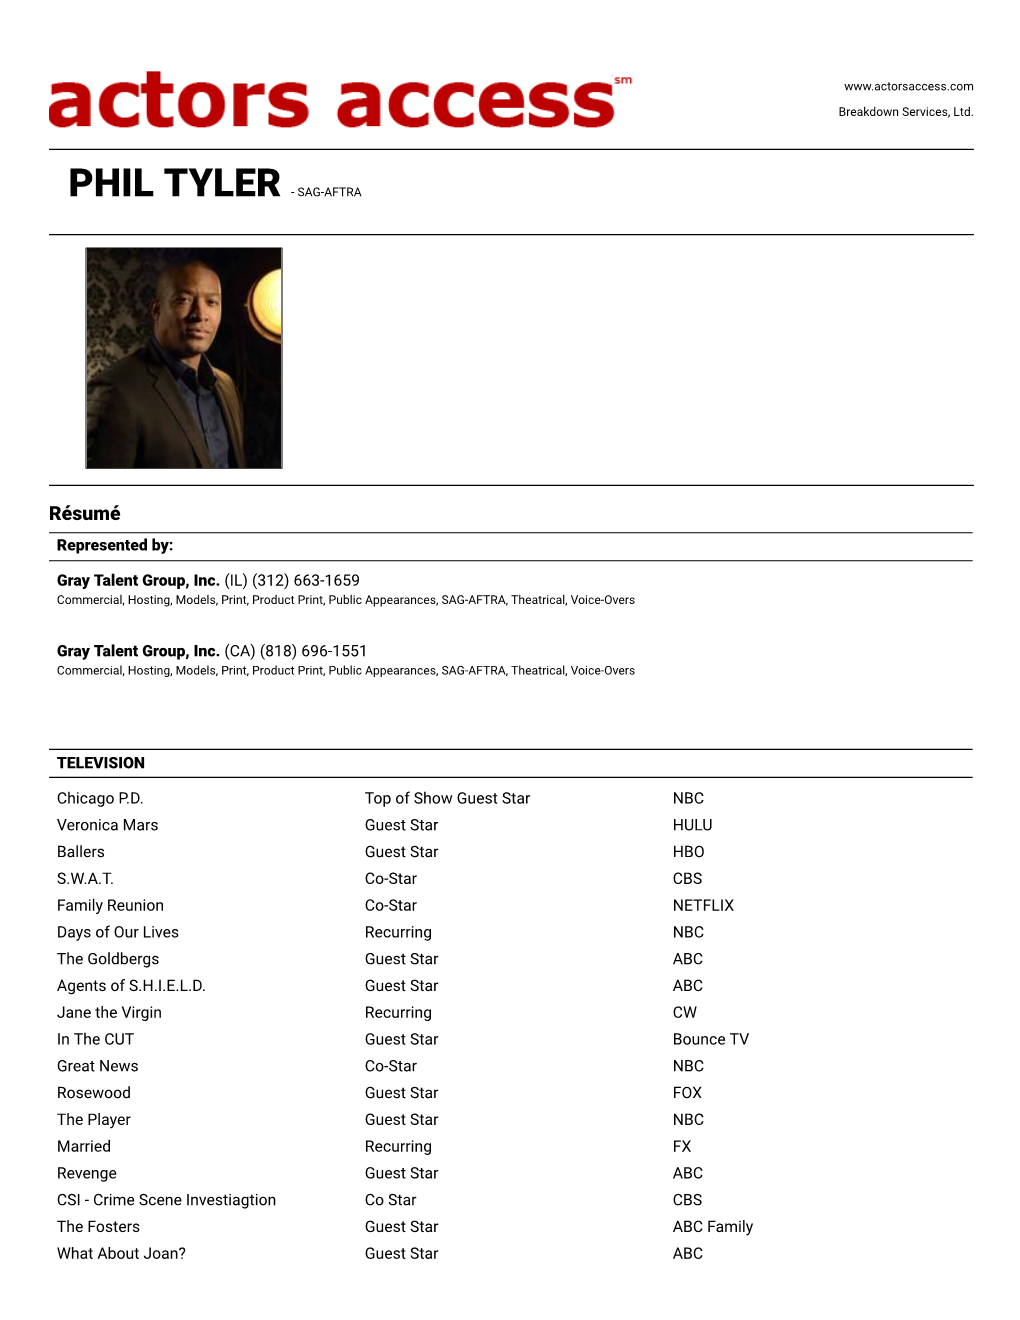 Phil Tyler - Sag-Aftra